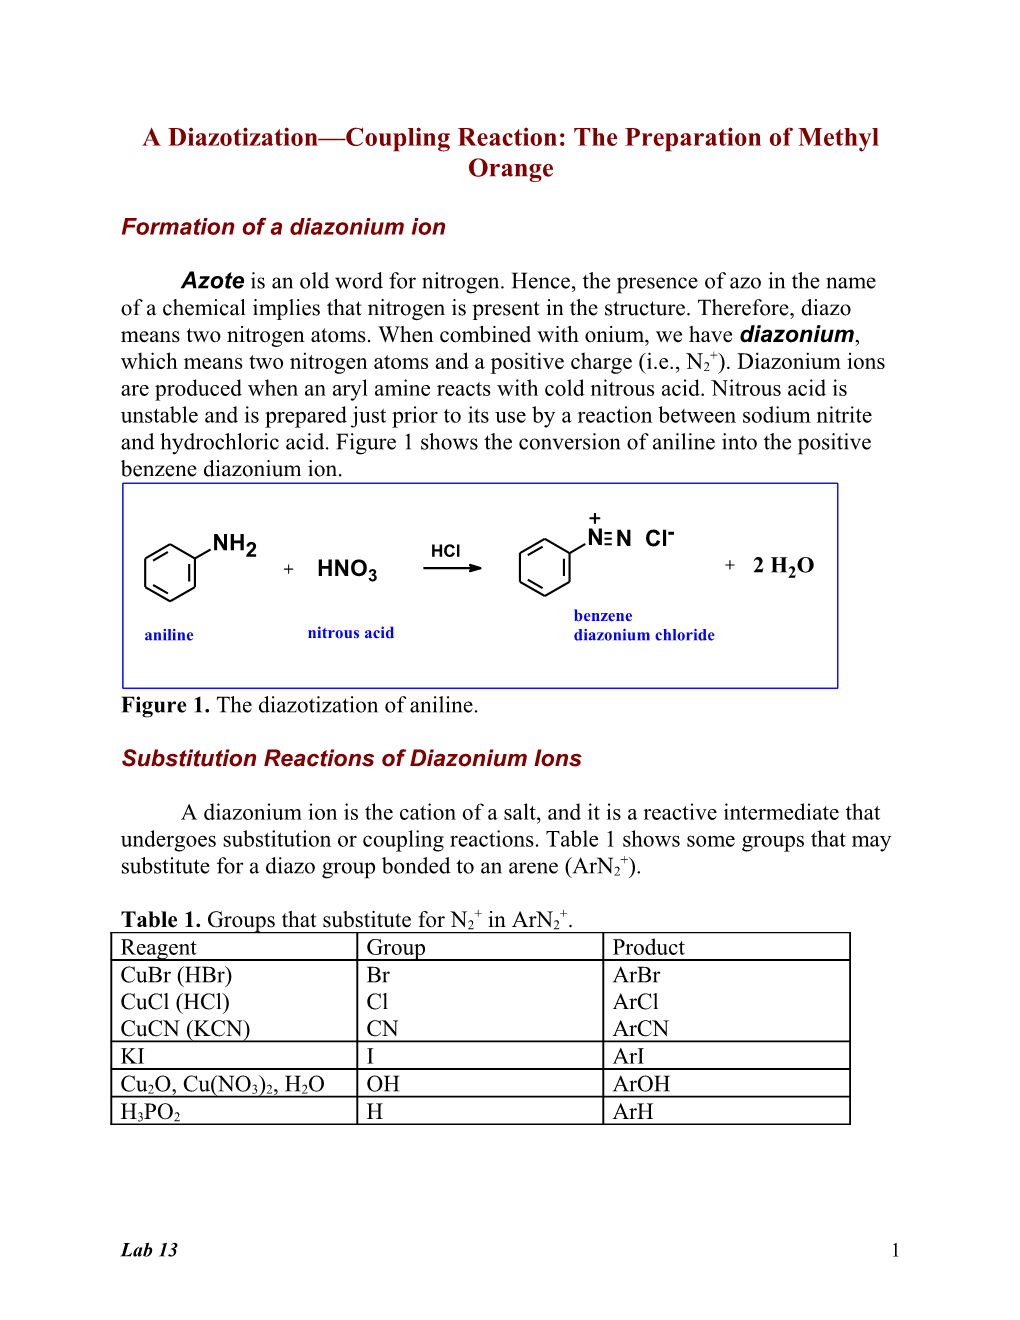 A Diazotization Coupling Reaction: the Preparation of Methyl Orange